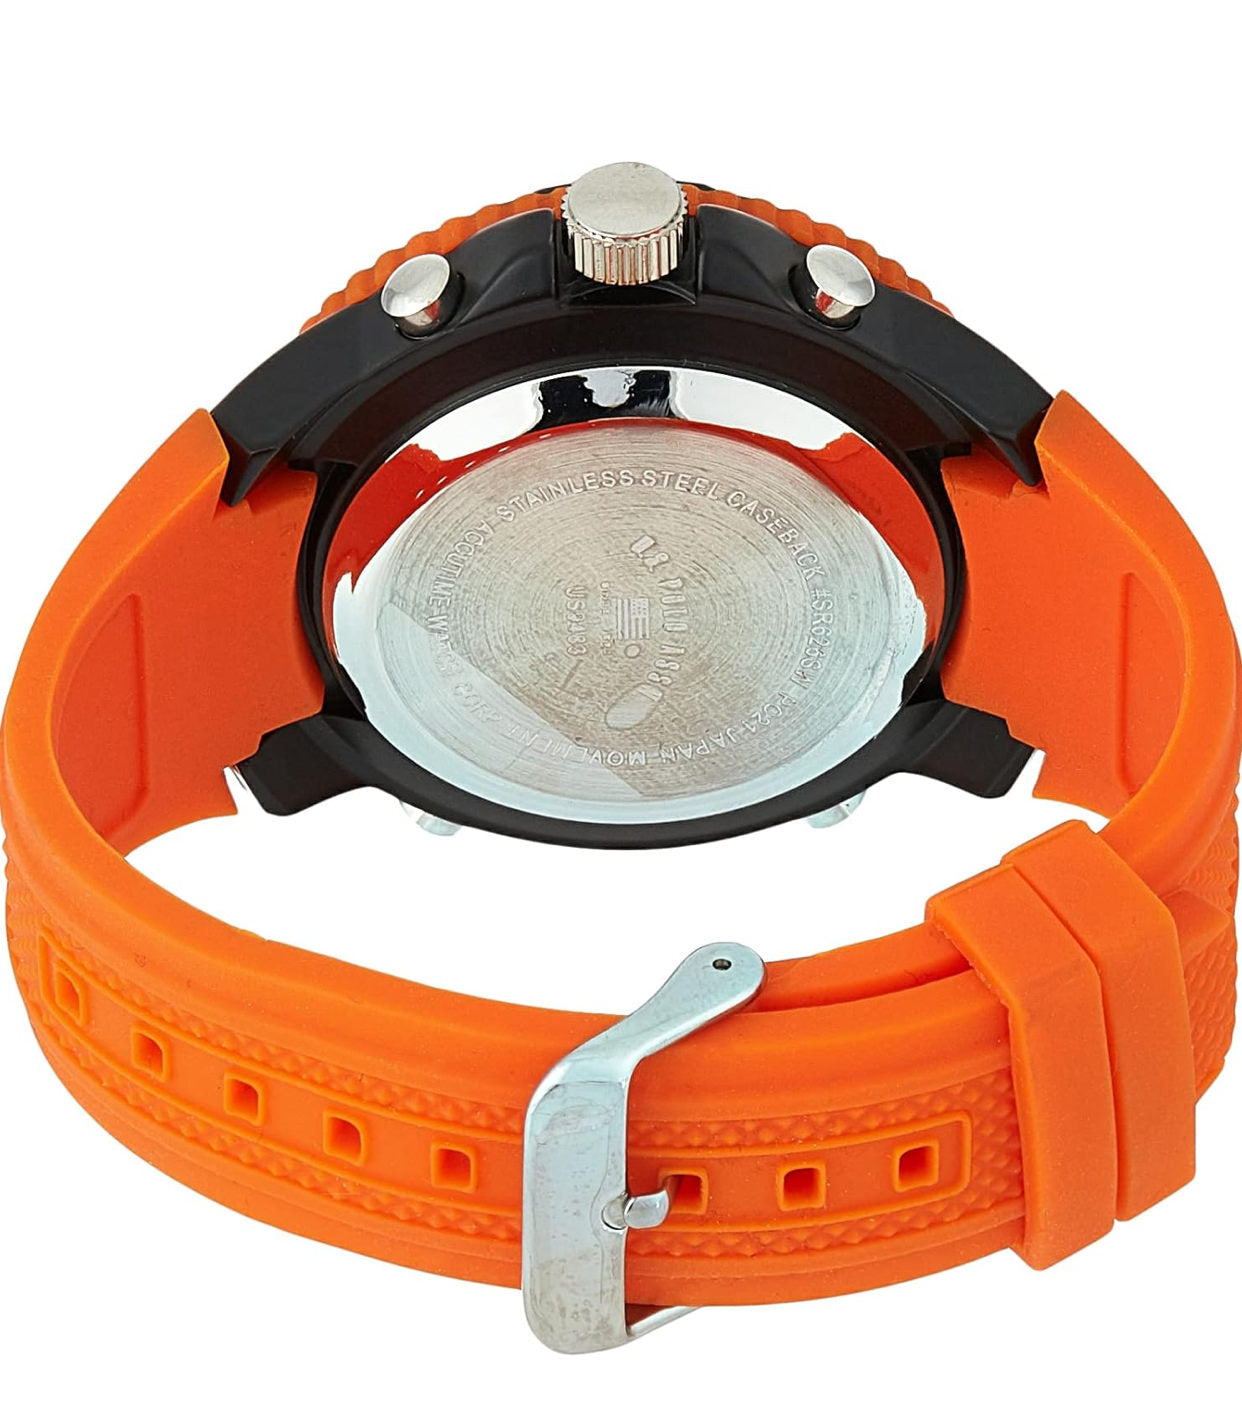 U.S. Polo Assn. Men's Quartz Watch, Analog-Digital Display & Silicone Strap